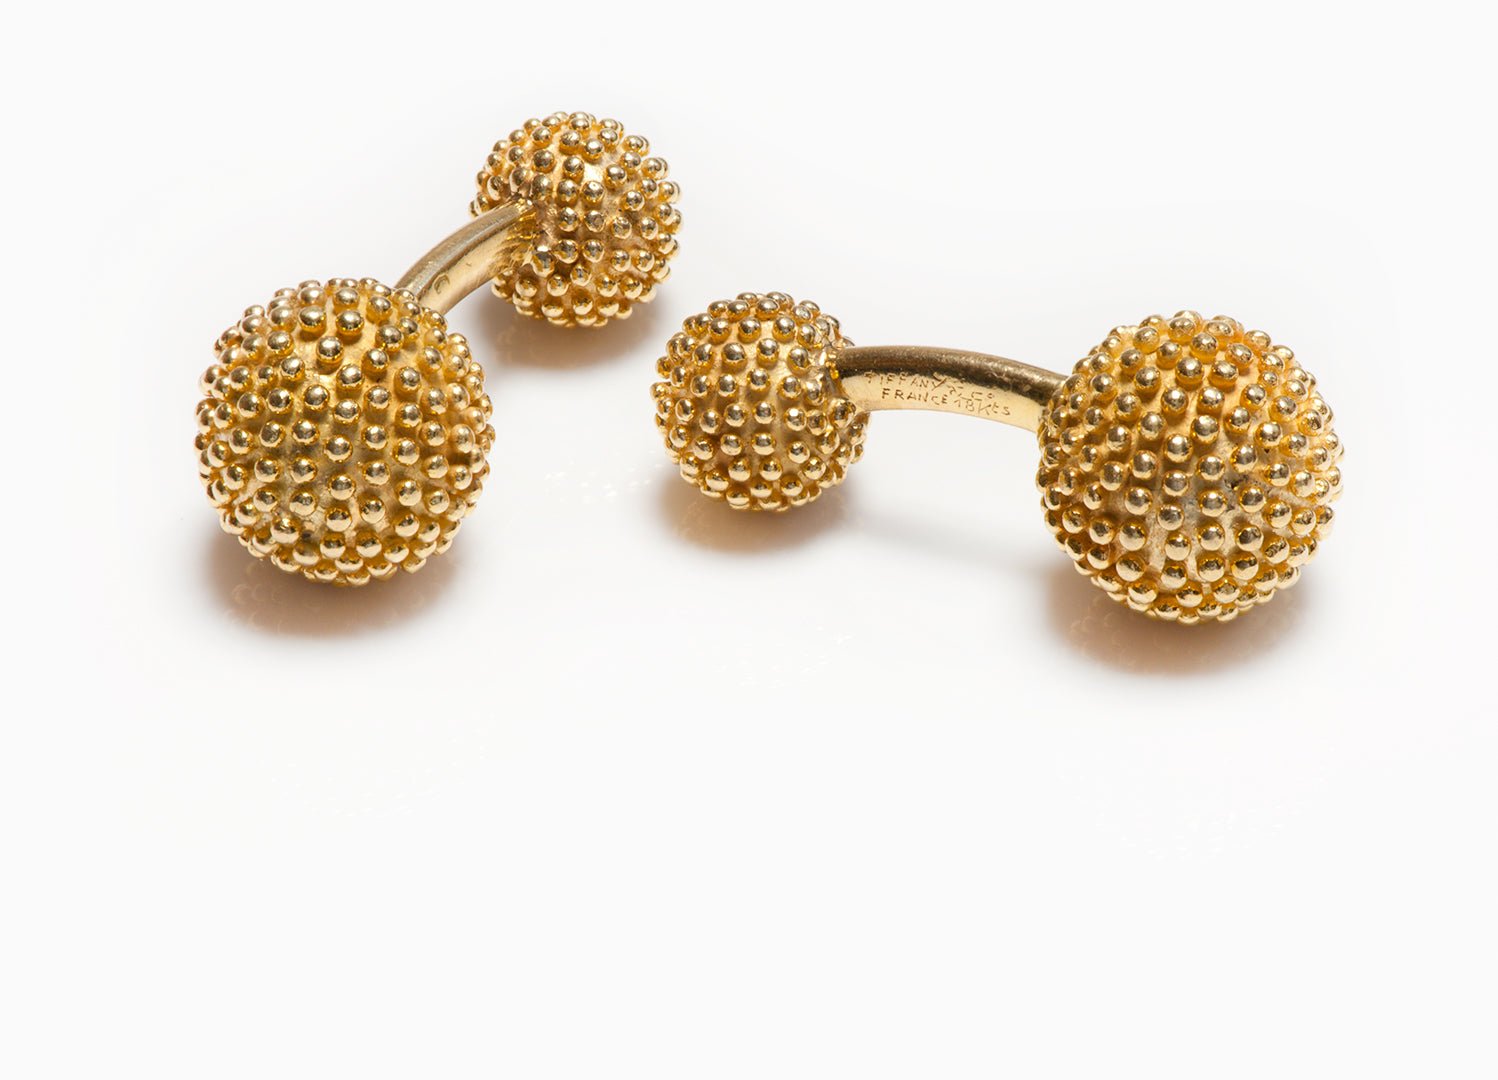 Tiffany & Co. France 18K Yellow Gold Sphere Beads Cufflinks